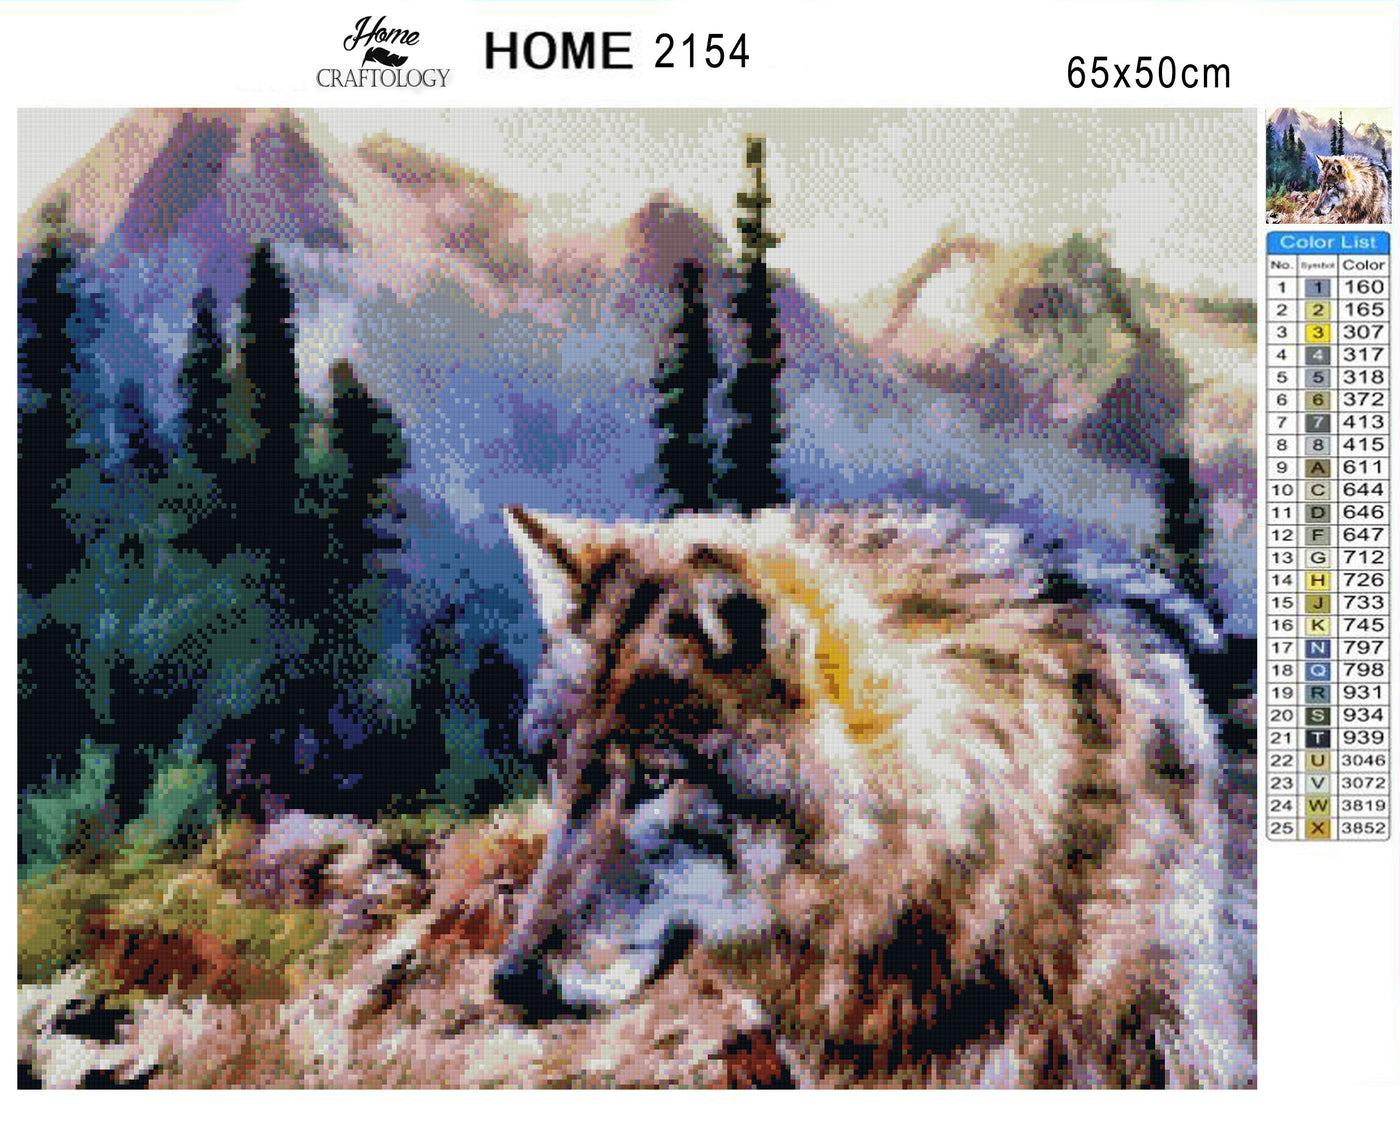 Wolf in the Mountain - Premium Diamond Painting Kit